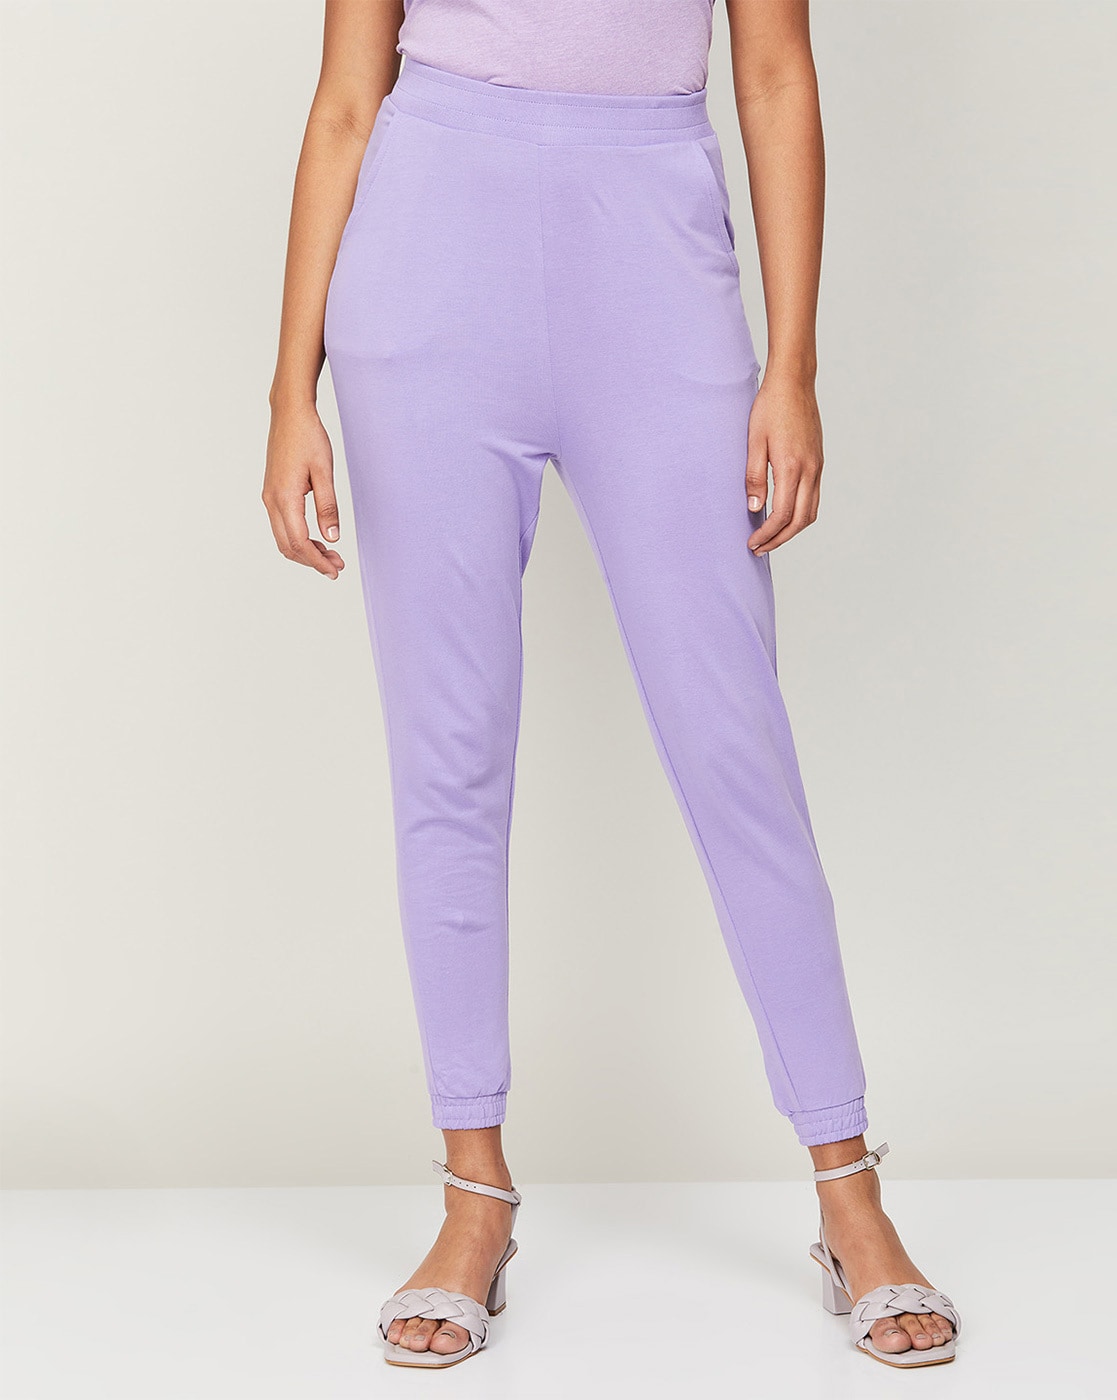 STAR by Julien Macdonald Purple Tailored Trousers  Freemans